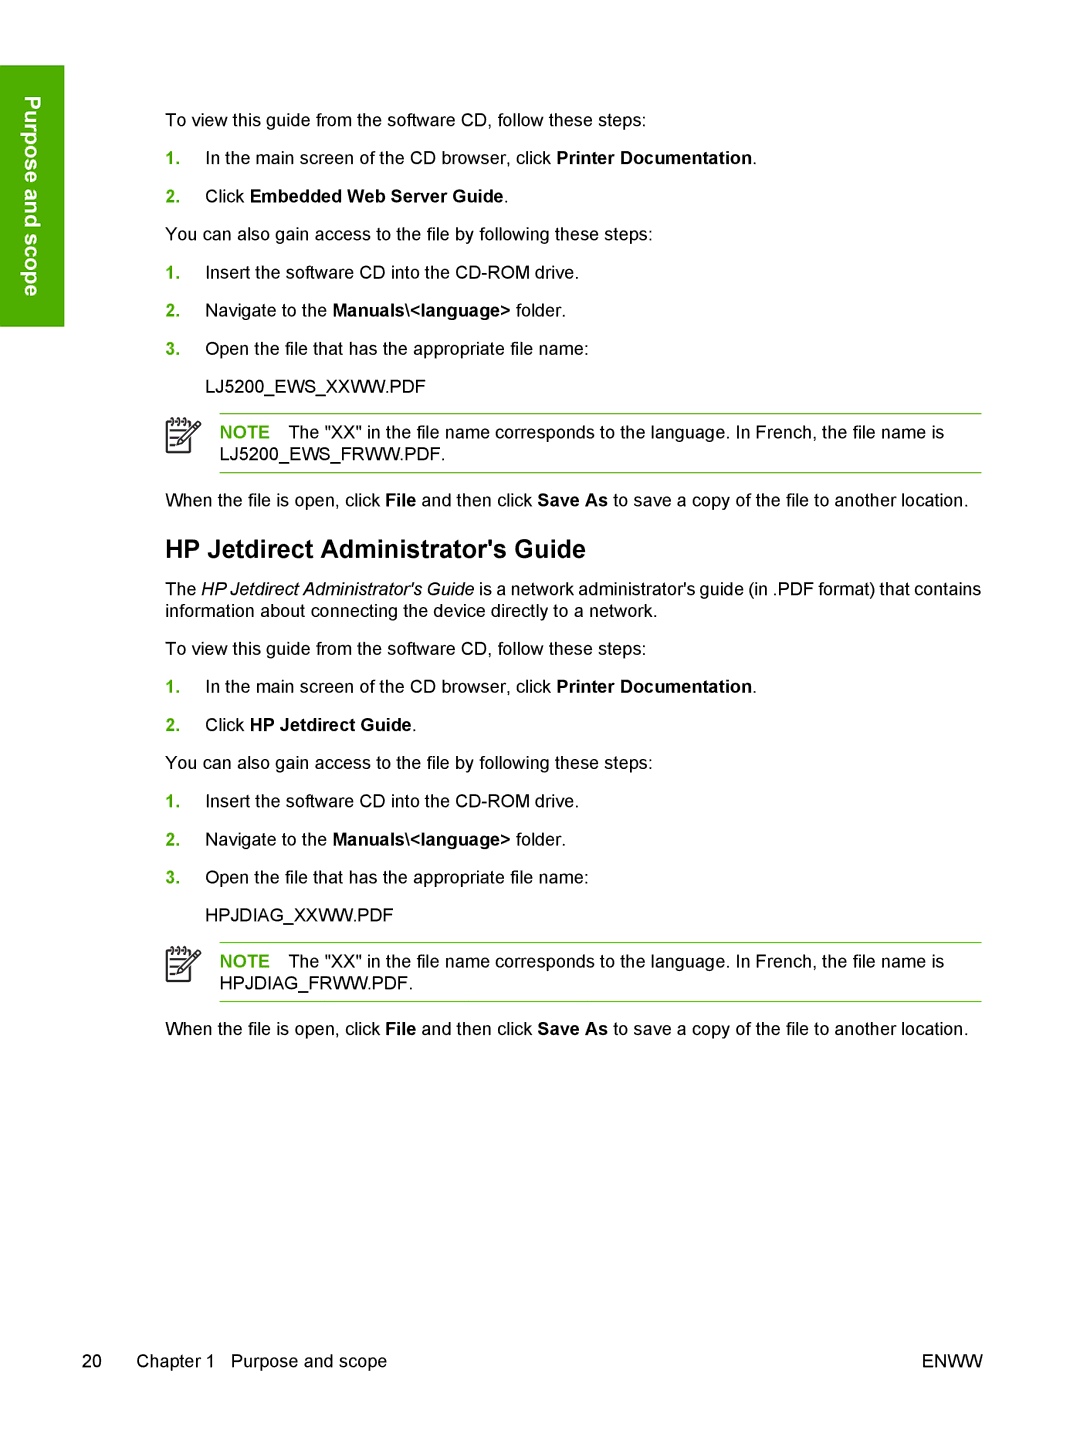 HP 5200L manual HP Jetdirect Administrators Guide, Click Embedded Web Server Guide, Click HP Jetdirect Guide 